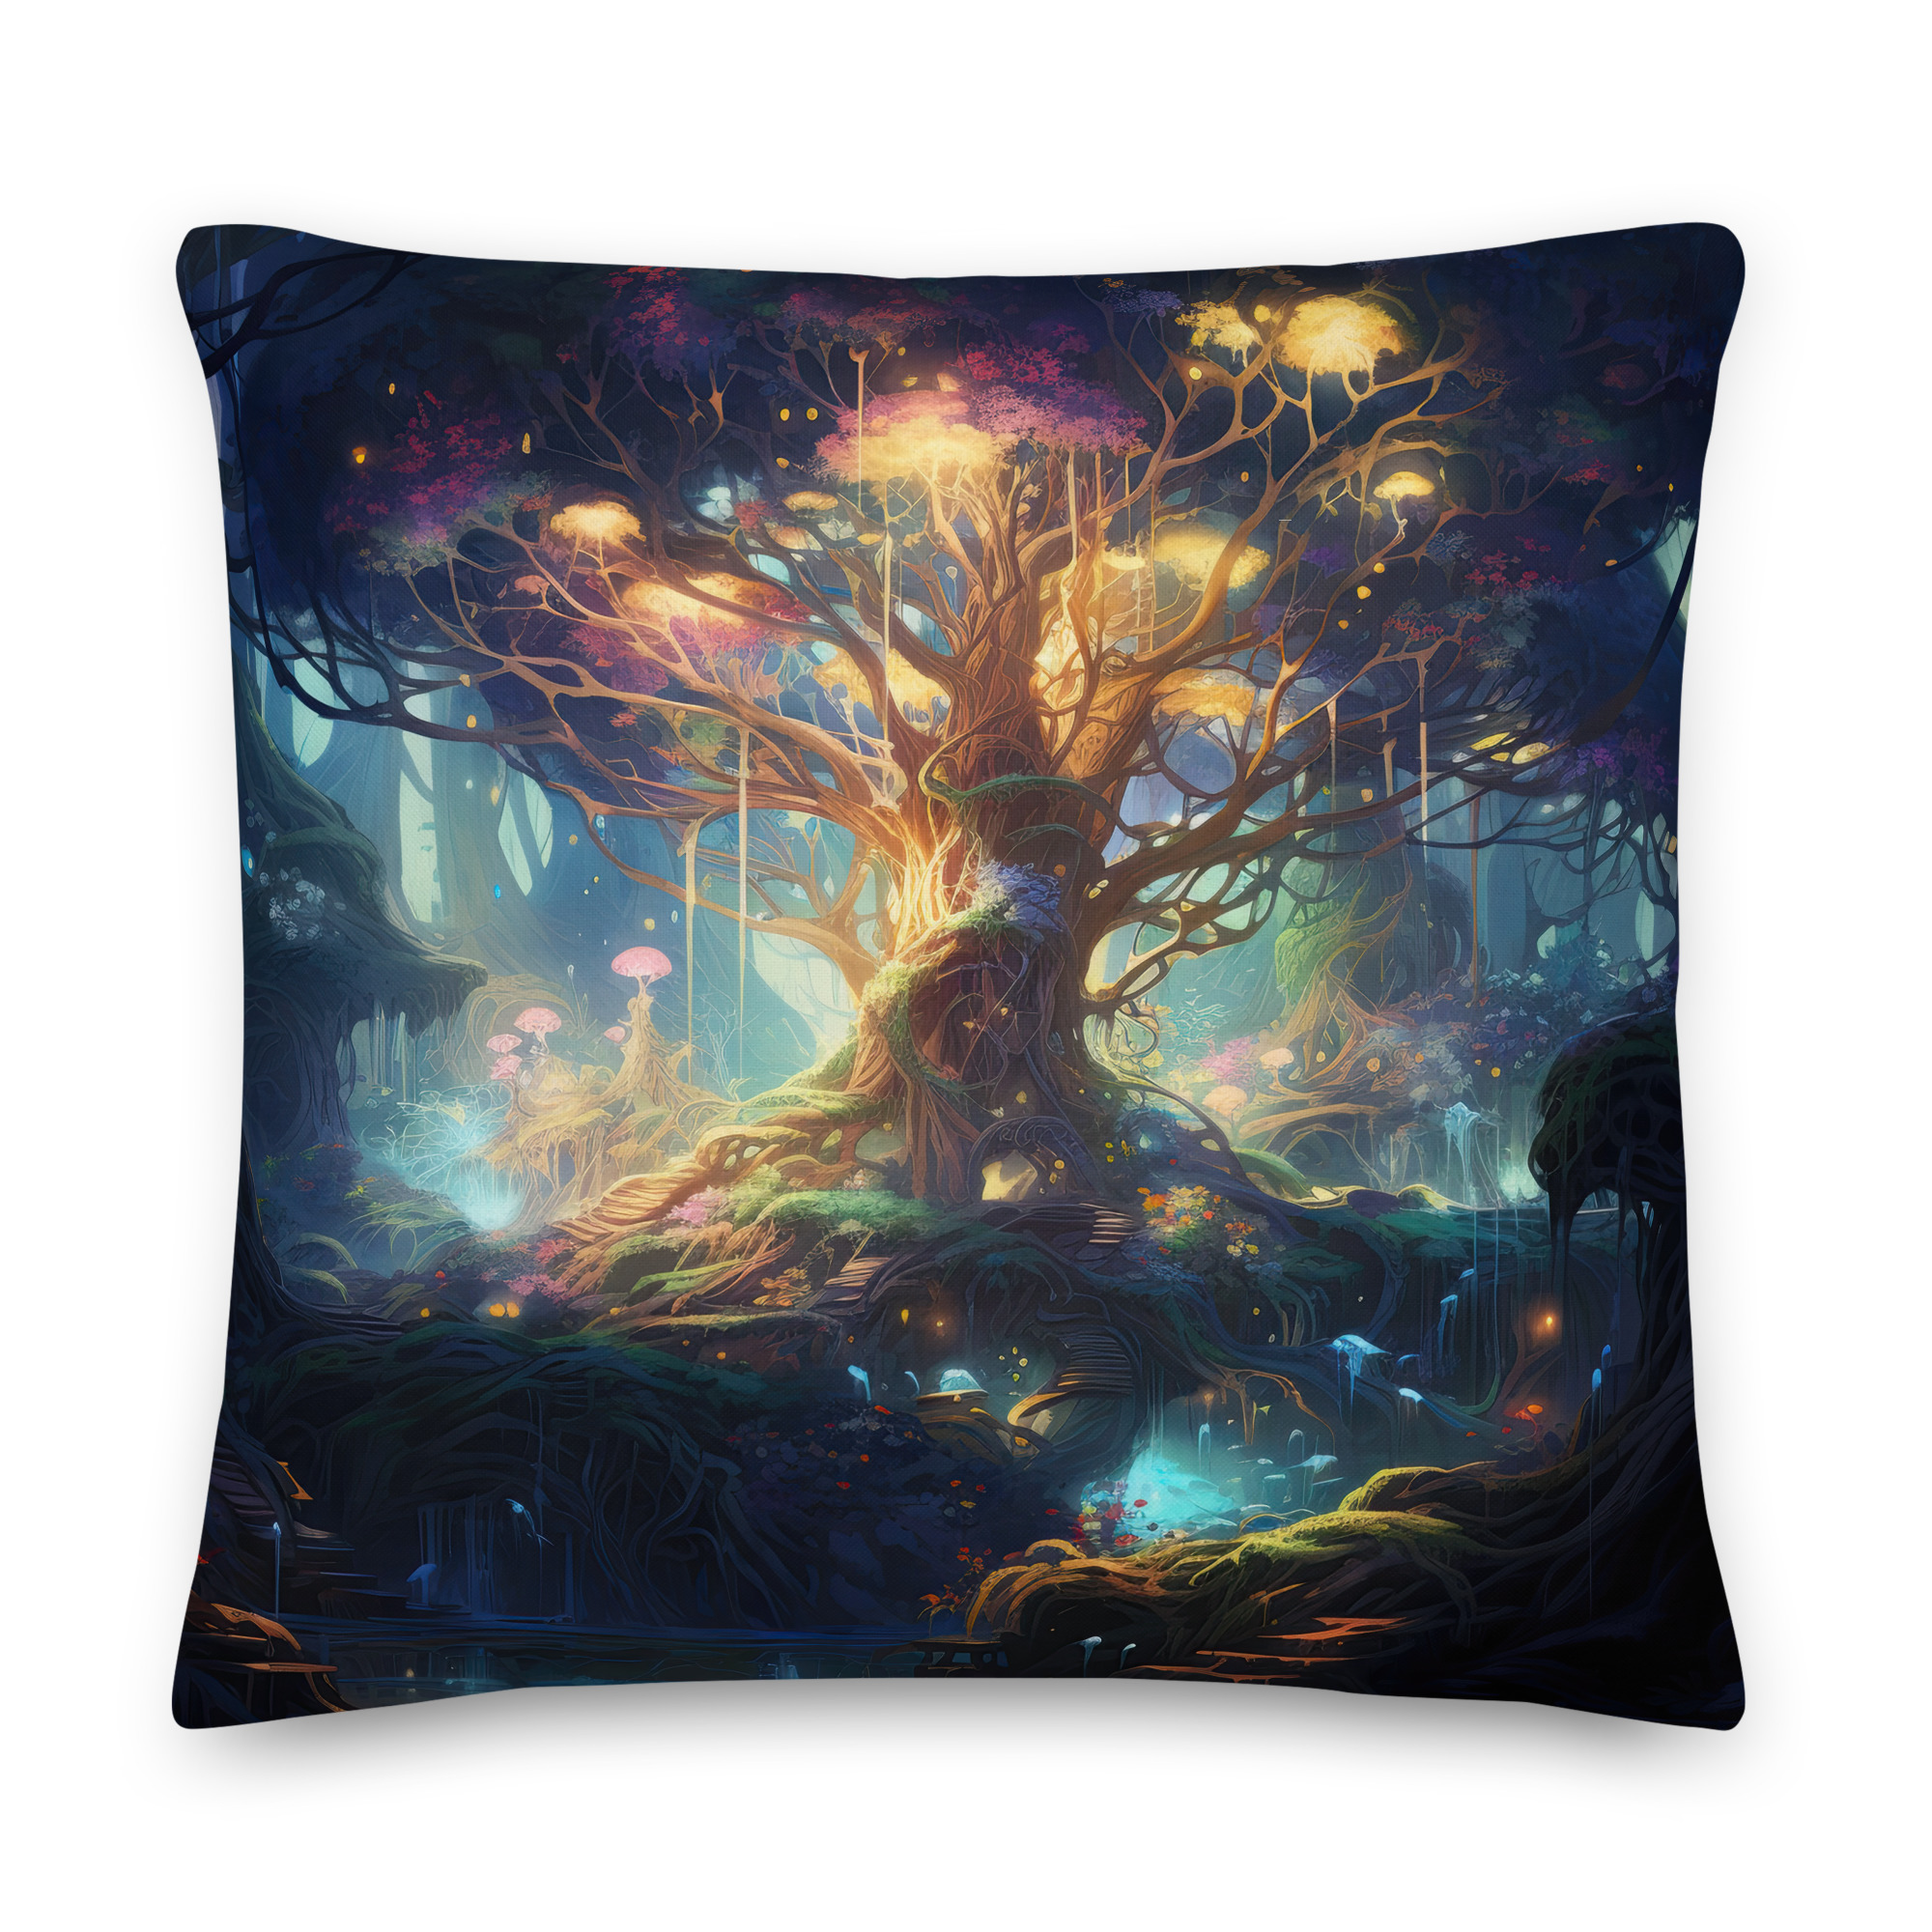 Magical Tree Kingdom Throw Pillow - 22×22